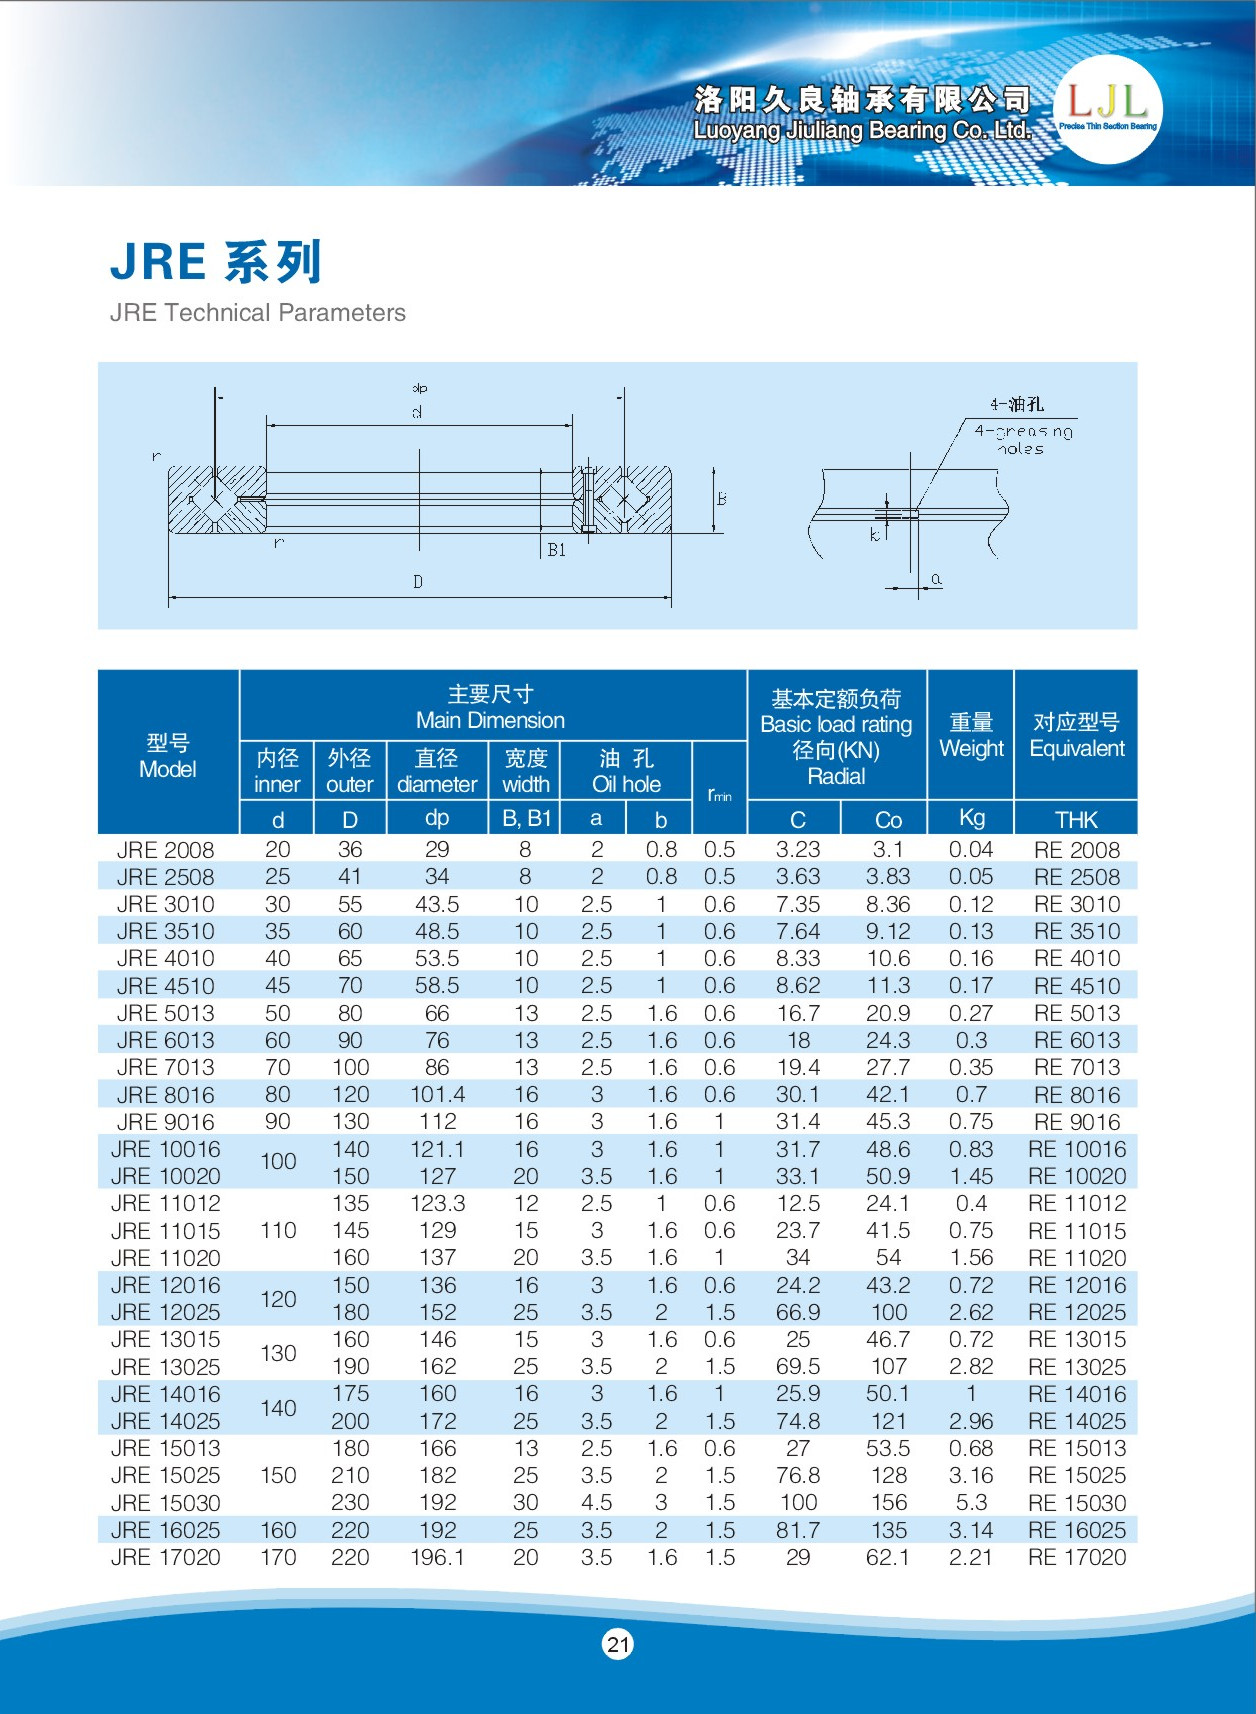 JRE 2008	 | 
JRE 2508	 | 
JRE 3010	 | 
JRE 3510	 | 
JRE 4010	 | 
JRE 4510	 | 
JRE 5013	 | 
JRE 6013	 | 
JRE 7013	 | 
JRE 8016	 | 
JRE 9016	 | 
JRE 10016	 | 
JRE 10020	 | 
JRE 11012	 | 
JRE 11015	 | 
JRE 11020	 | 
JRE 12016	 | 
JRE 12025	 | 
JRE 13015	 | 
JRE 13025	 | 
JRE 14016	 | 
JRE 14025	 | 
JRE 15013	 | 
JRE 15025	 | 
JRE 15030	 | 
JRE 16025	 | 
JRE 17020	 | 